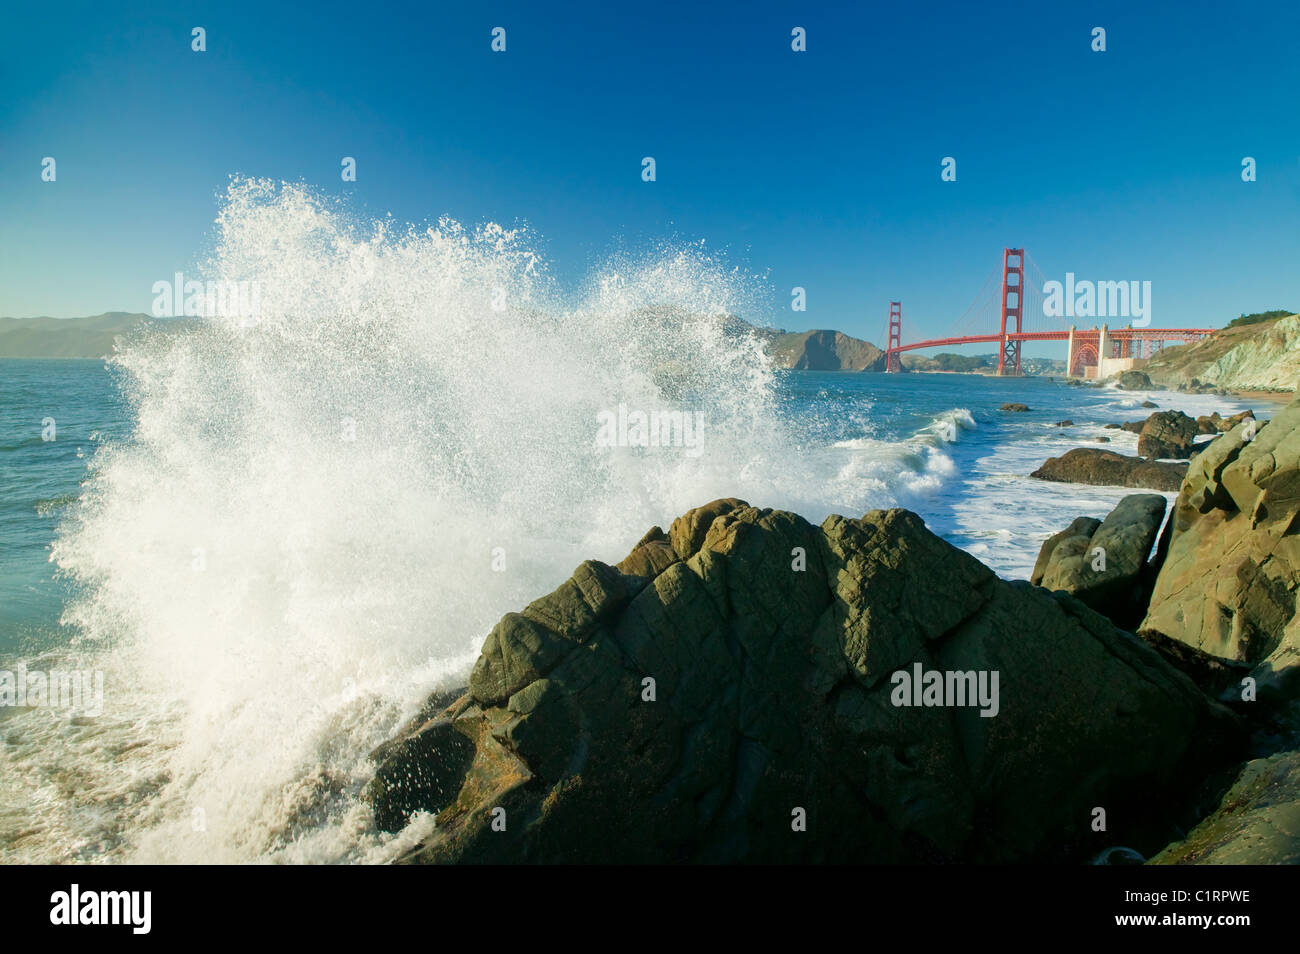 A large ocean wave crashing into rock at Baker Beach, Golden Gate Bridge in background Stock Photo